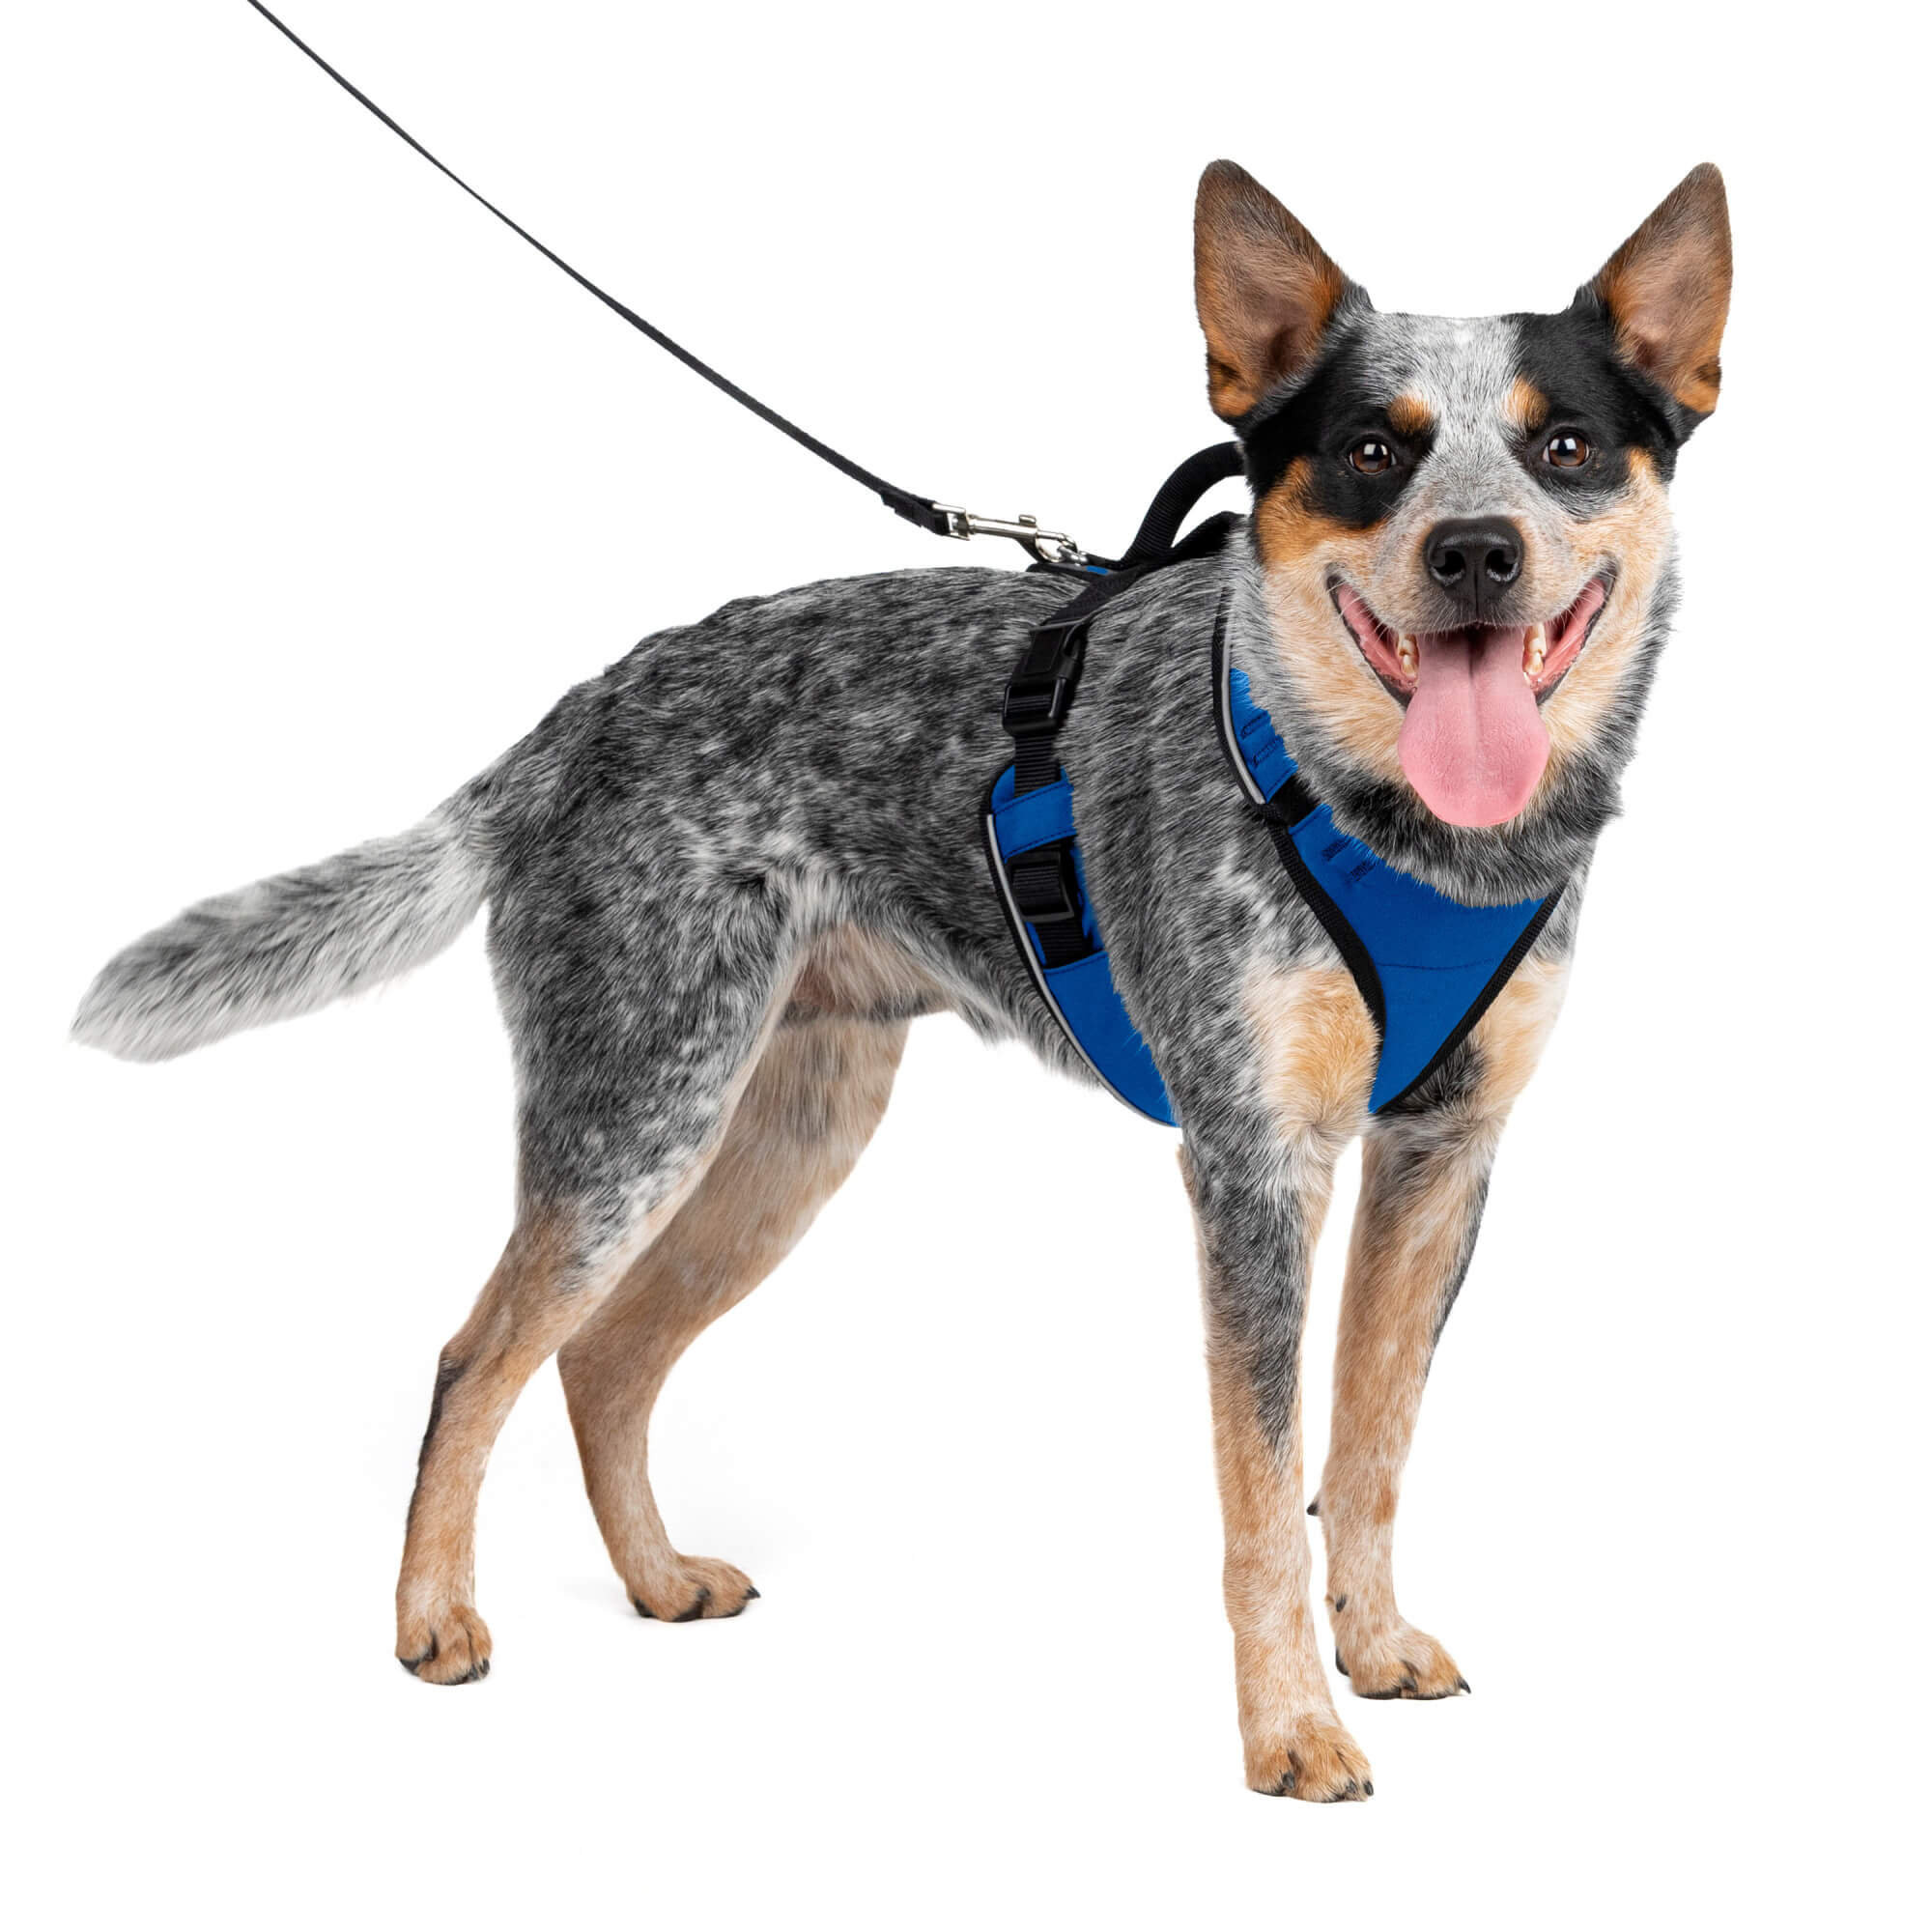 Dog wearing blue petsafe easysport harness in medium